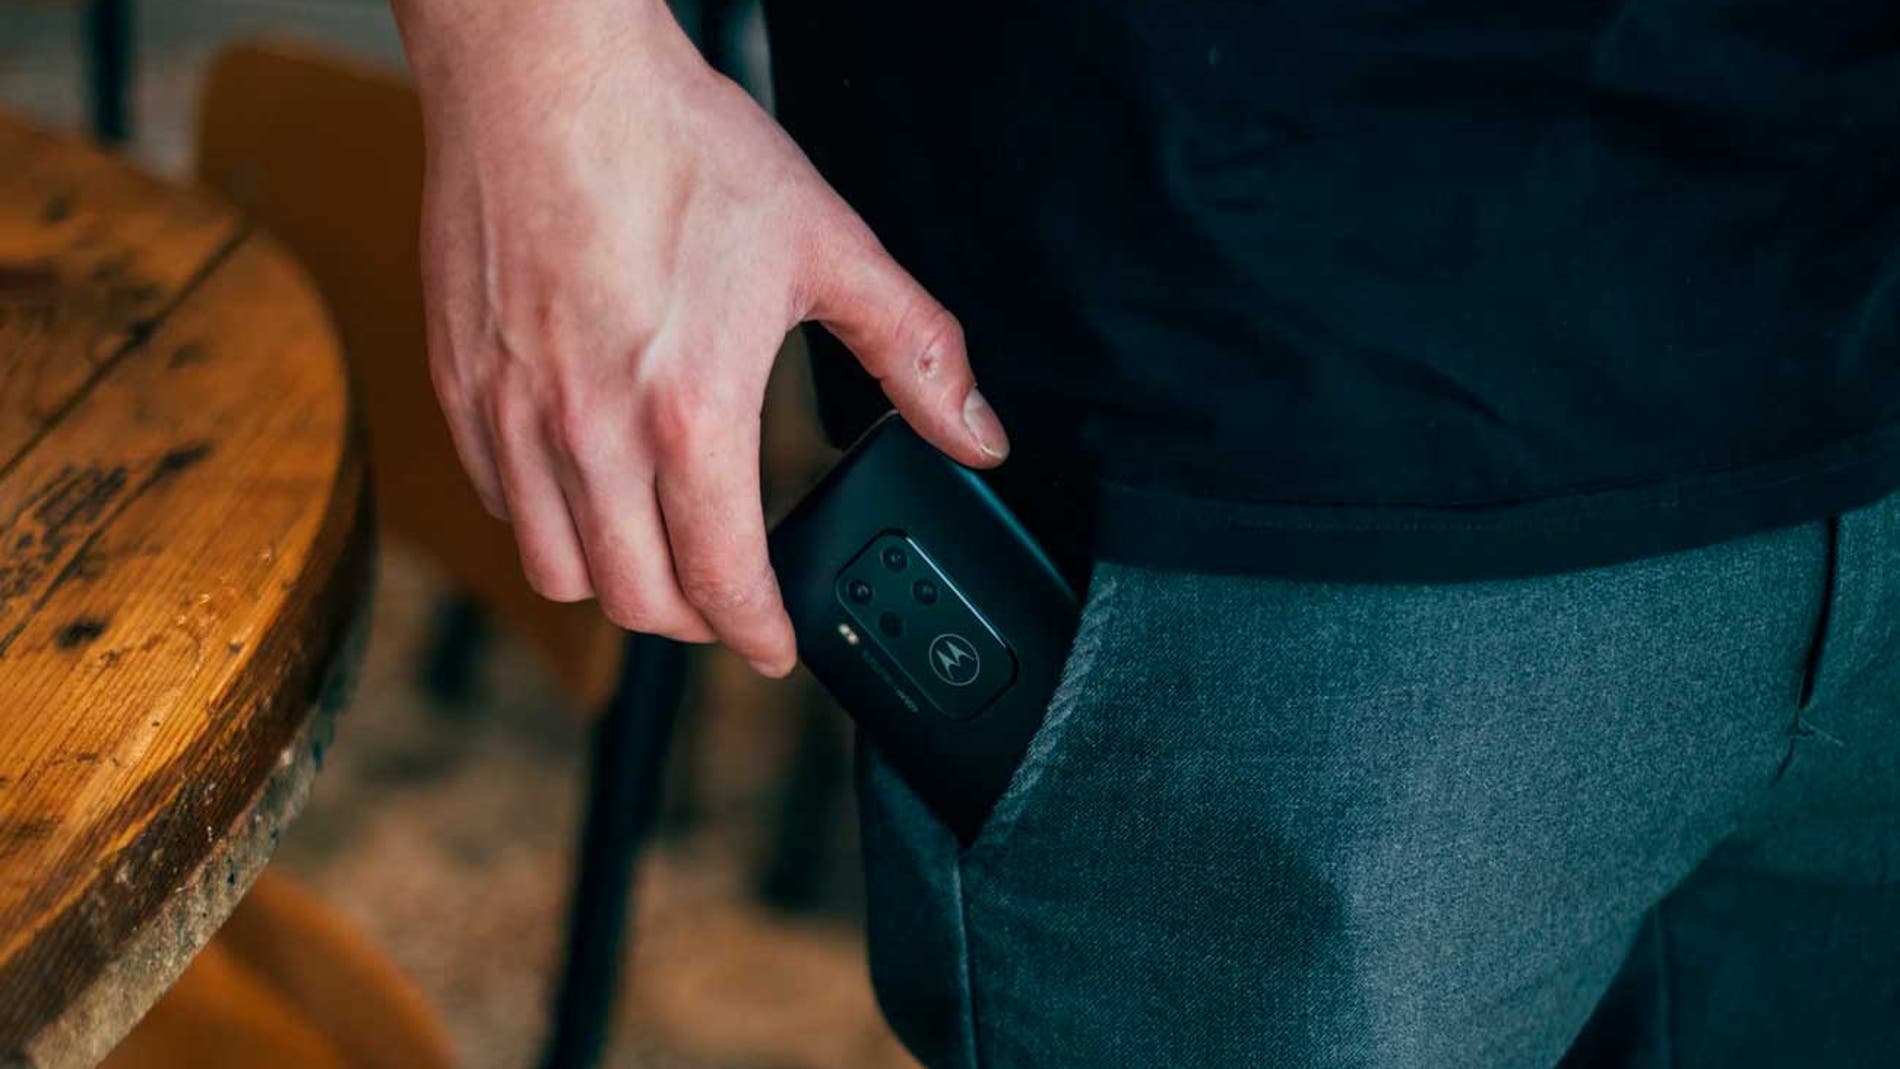 Guarda tu móvil en el bolsillo de forma segura